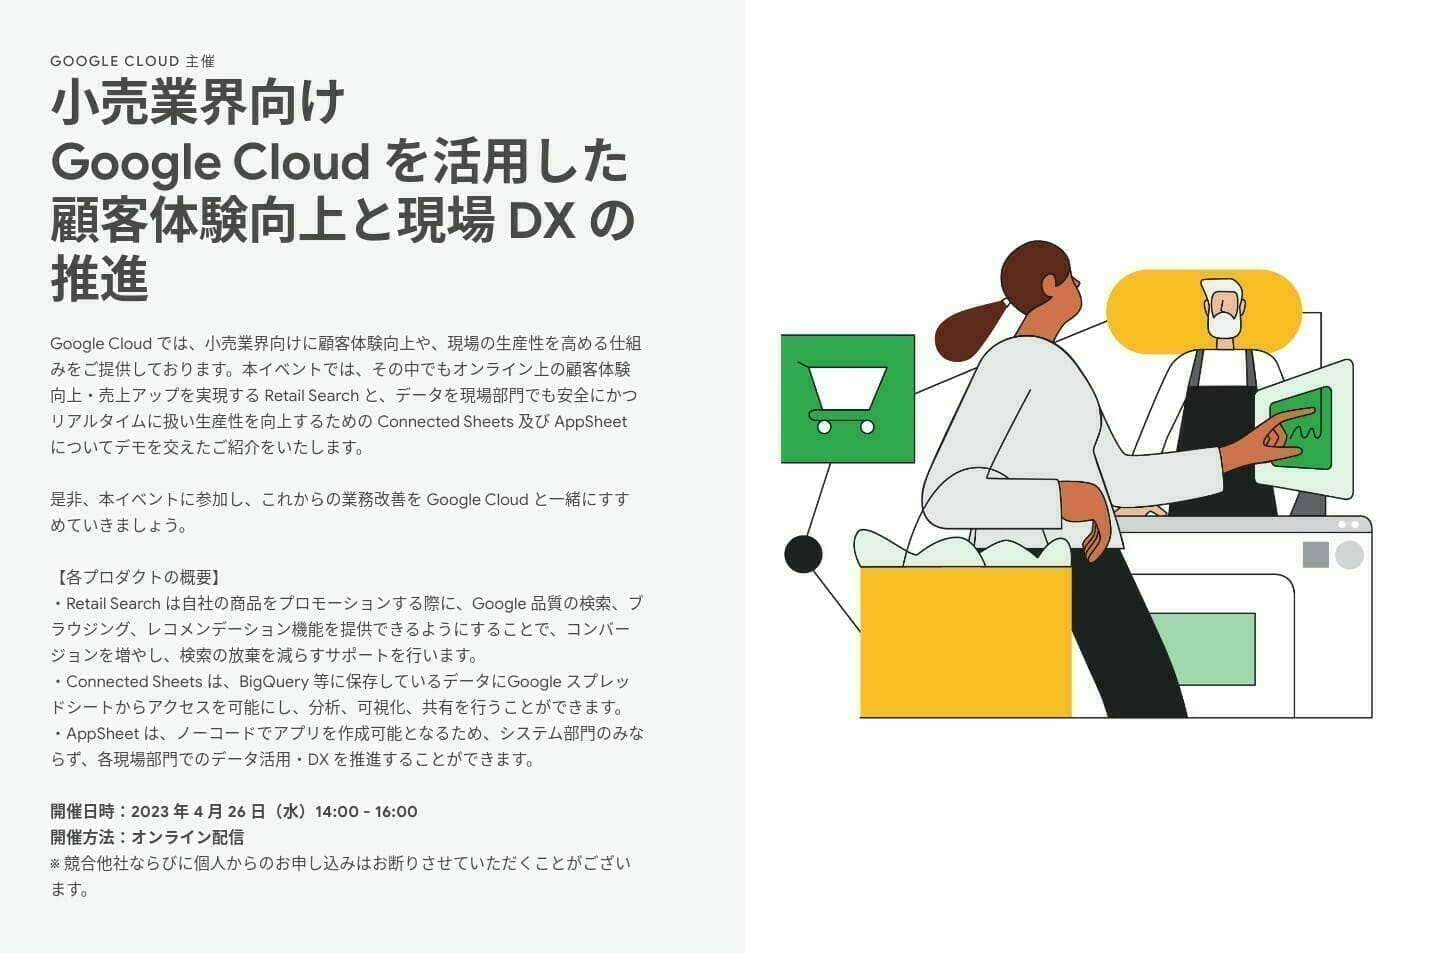 [Google Cloud] 小売業界向け Google Cloud を活用した顧客体験向上と現場 DX の推進